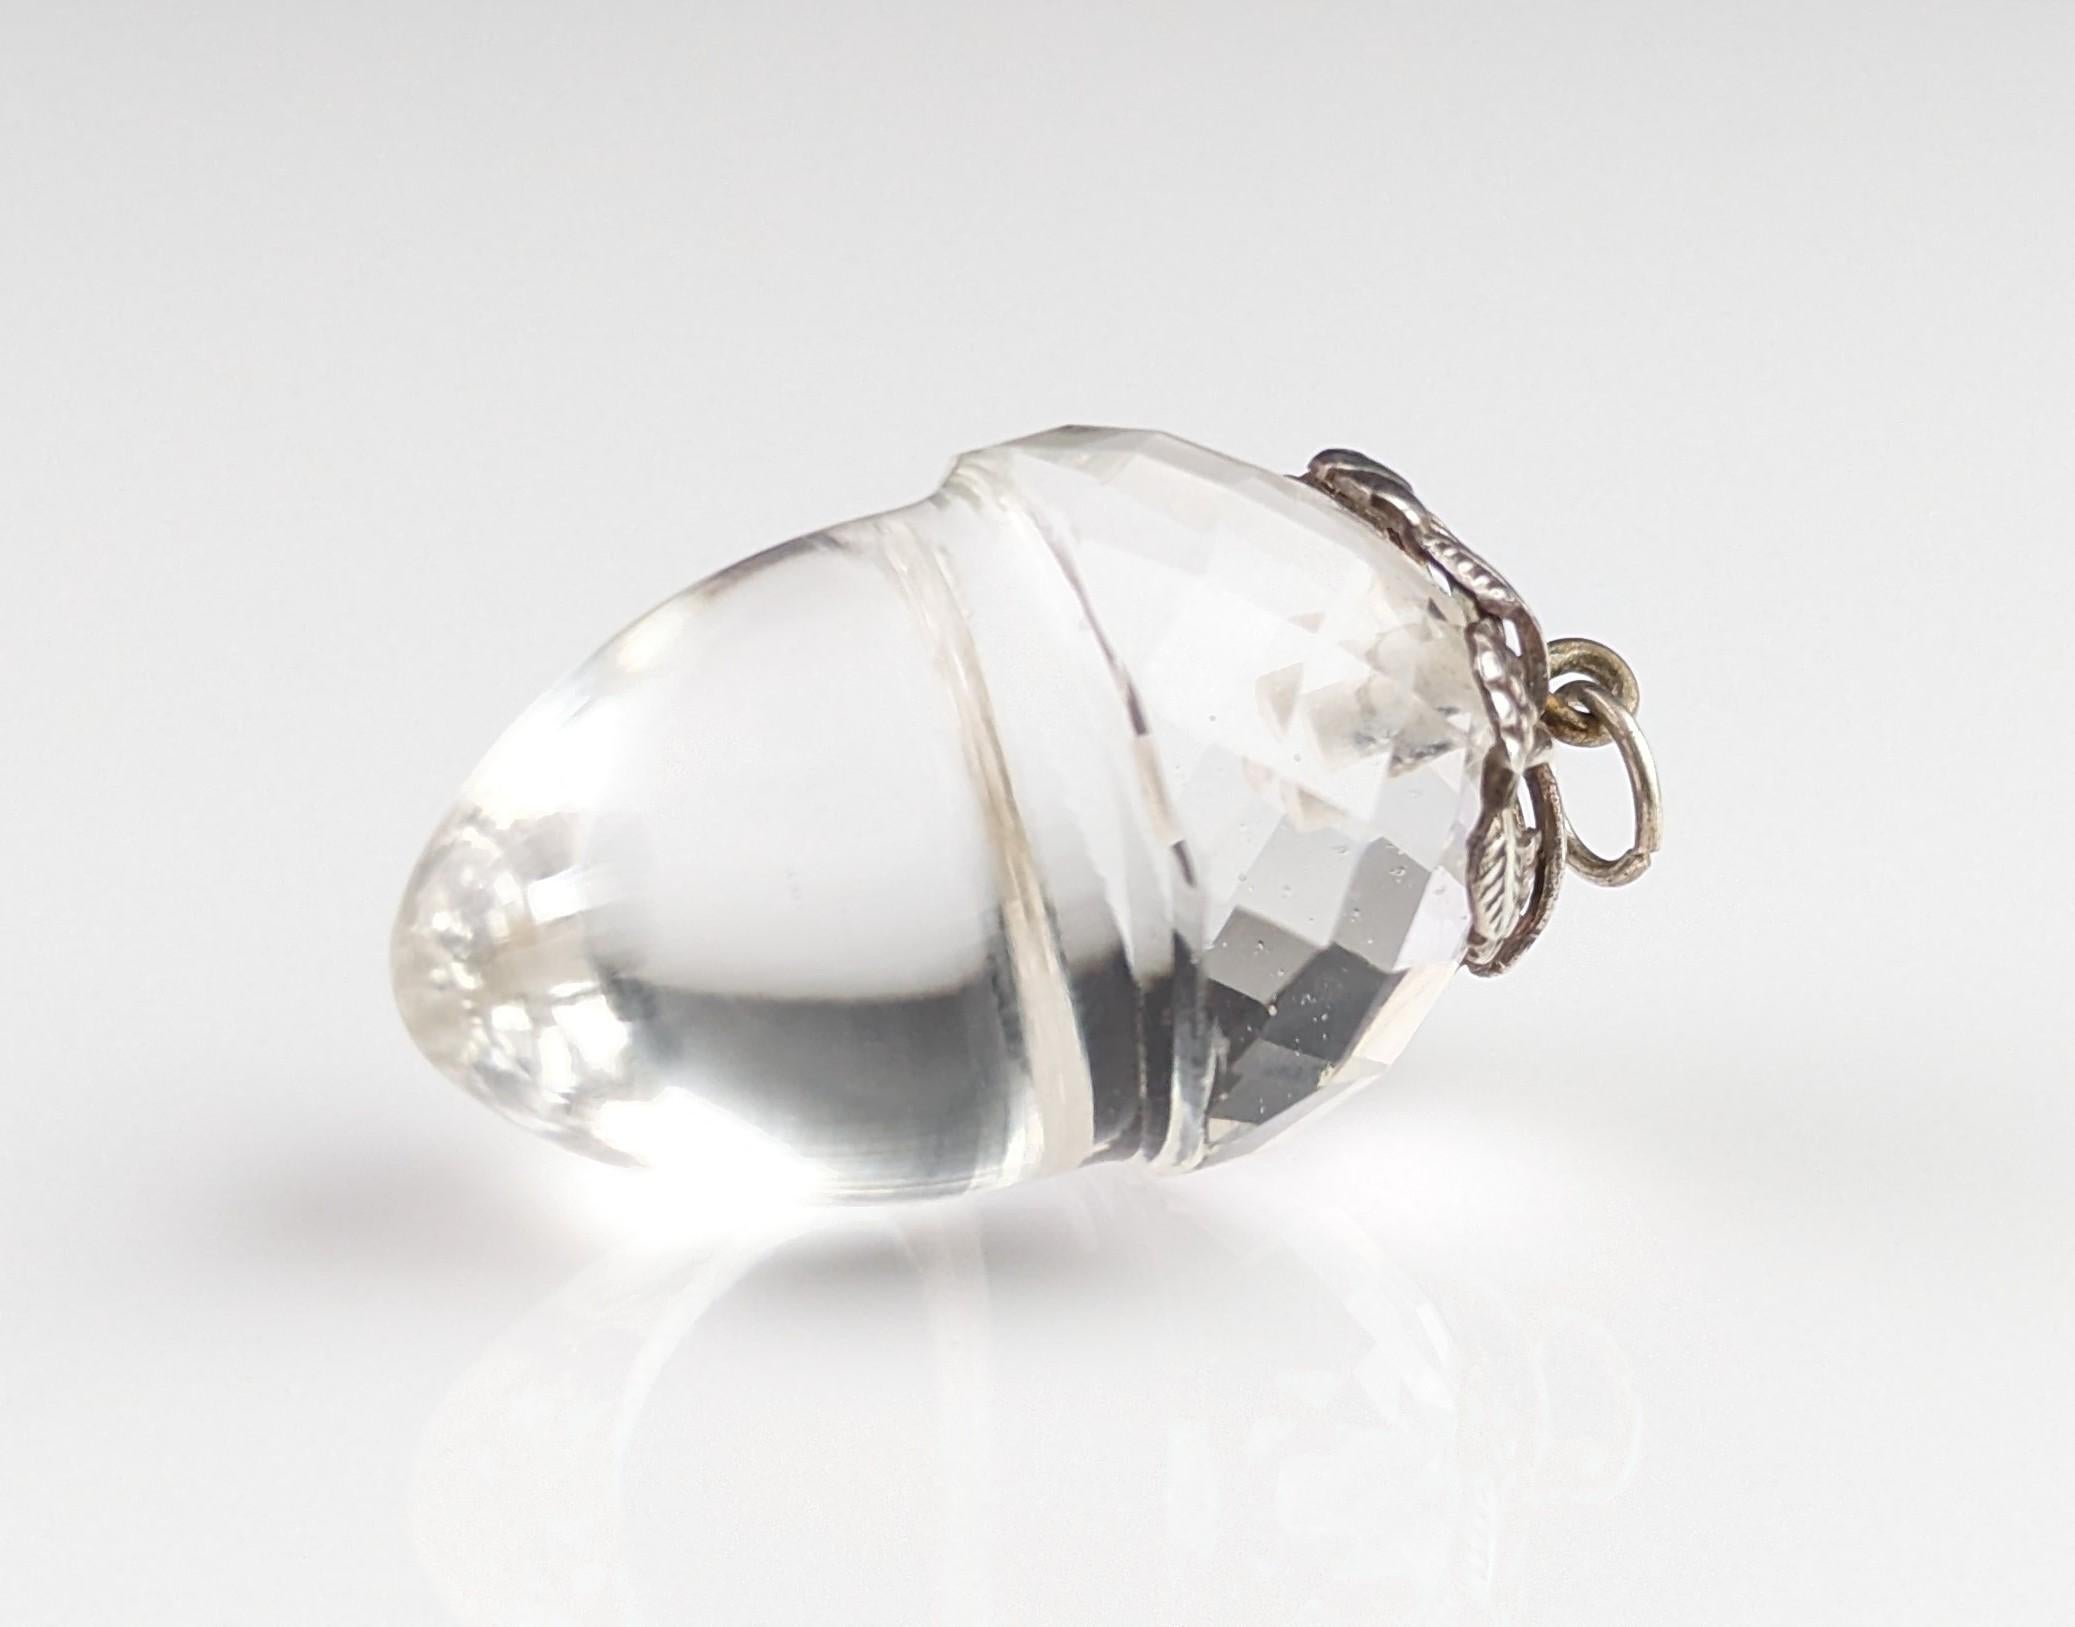 Antique Victorian Rock crystal acorn pendant, sterling silver  8